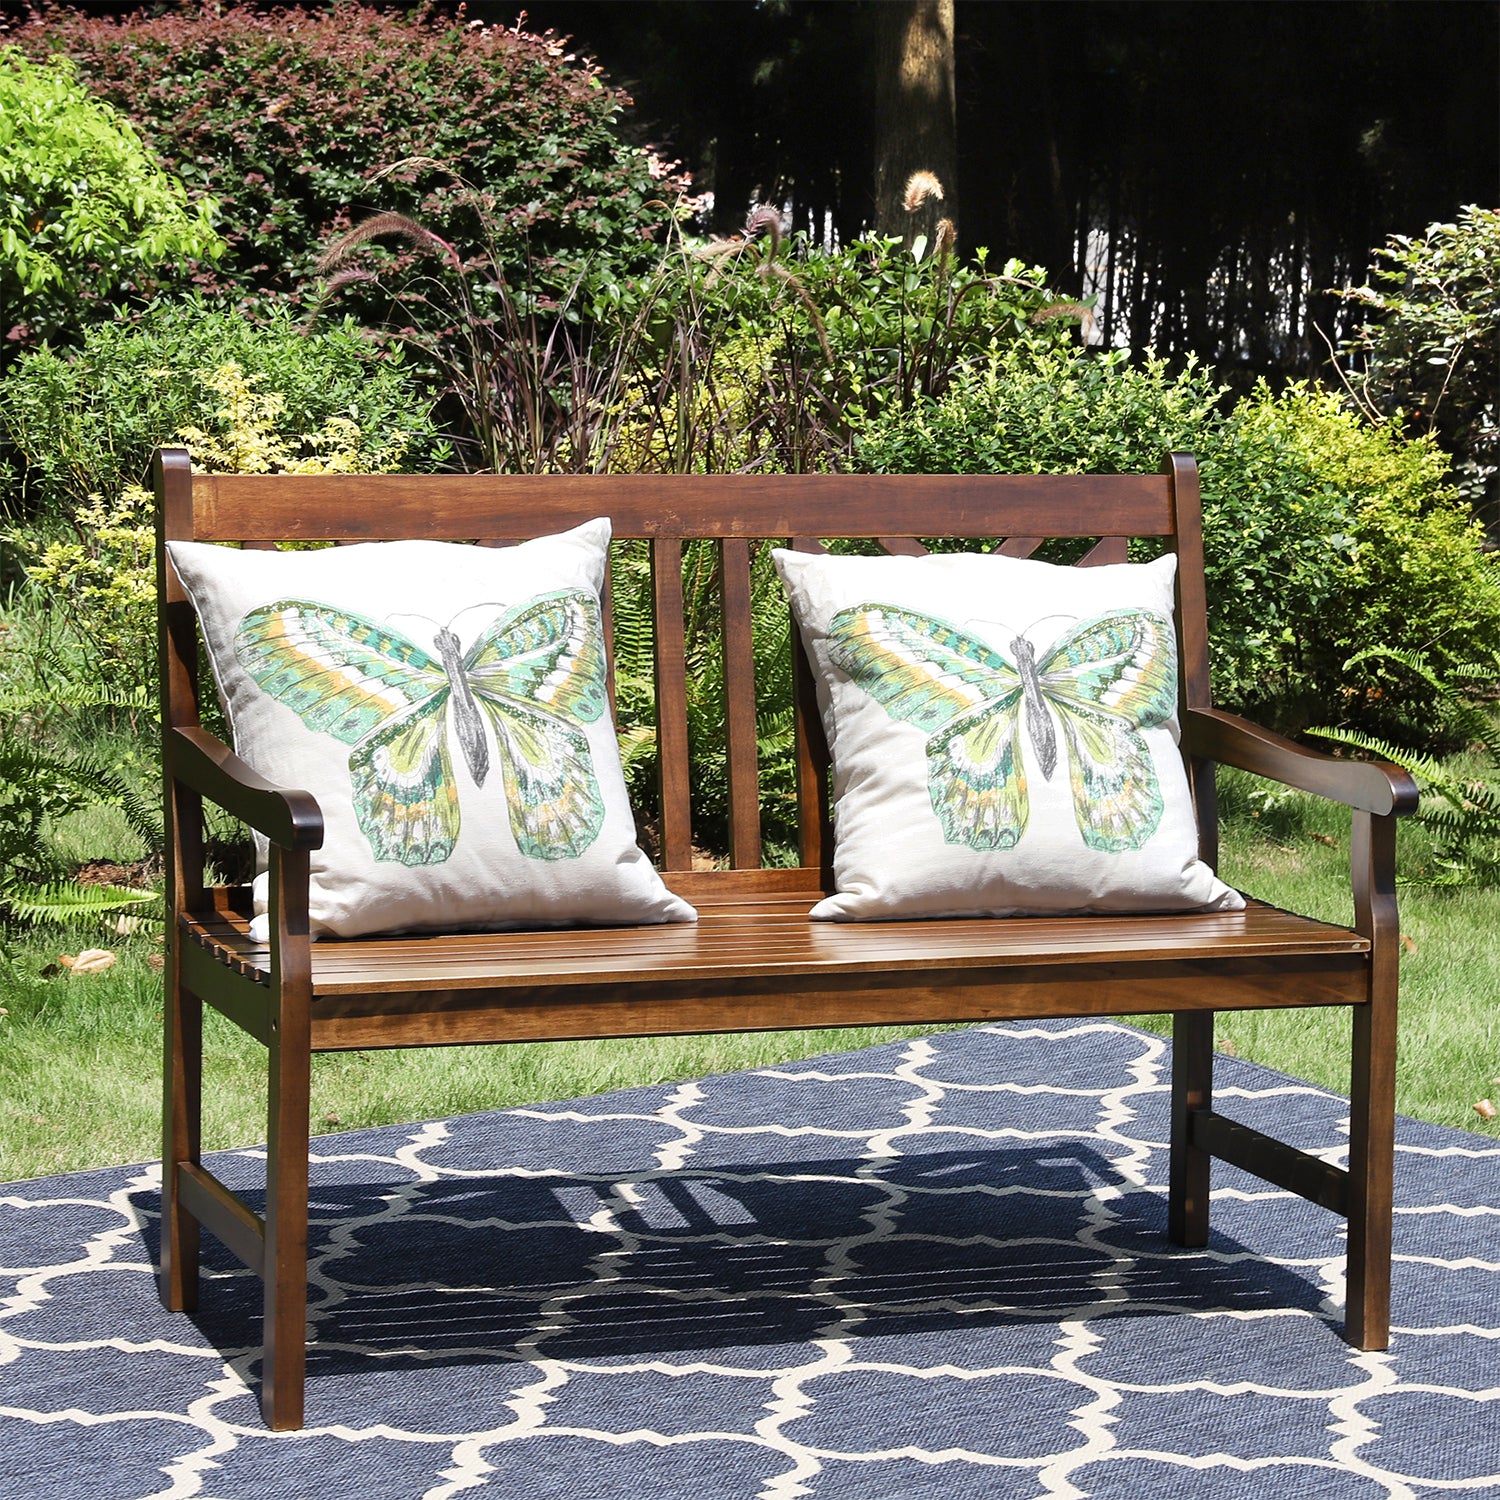 Sophia & William 2-Seat Outdoor Wooden Bench for Patio, Garden, Lawn, Balcony, Yard, Porch